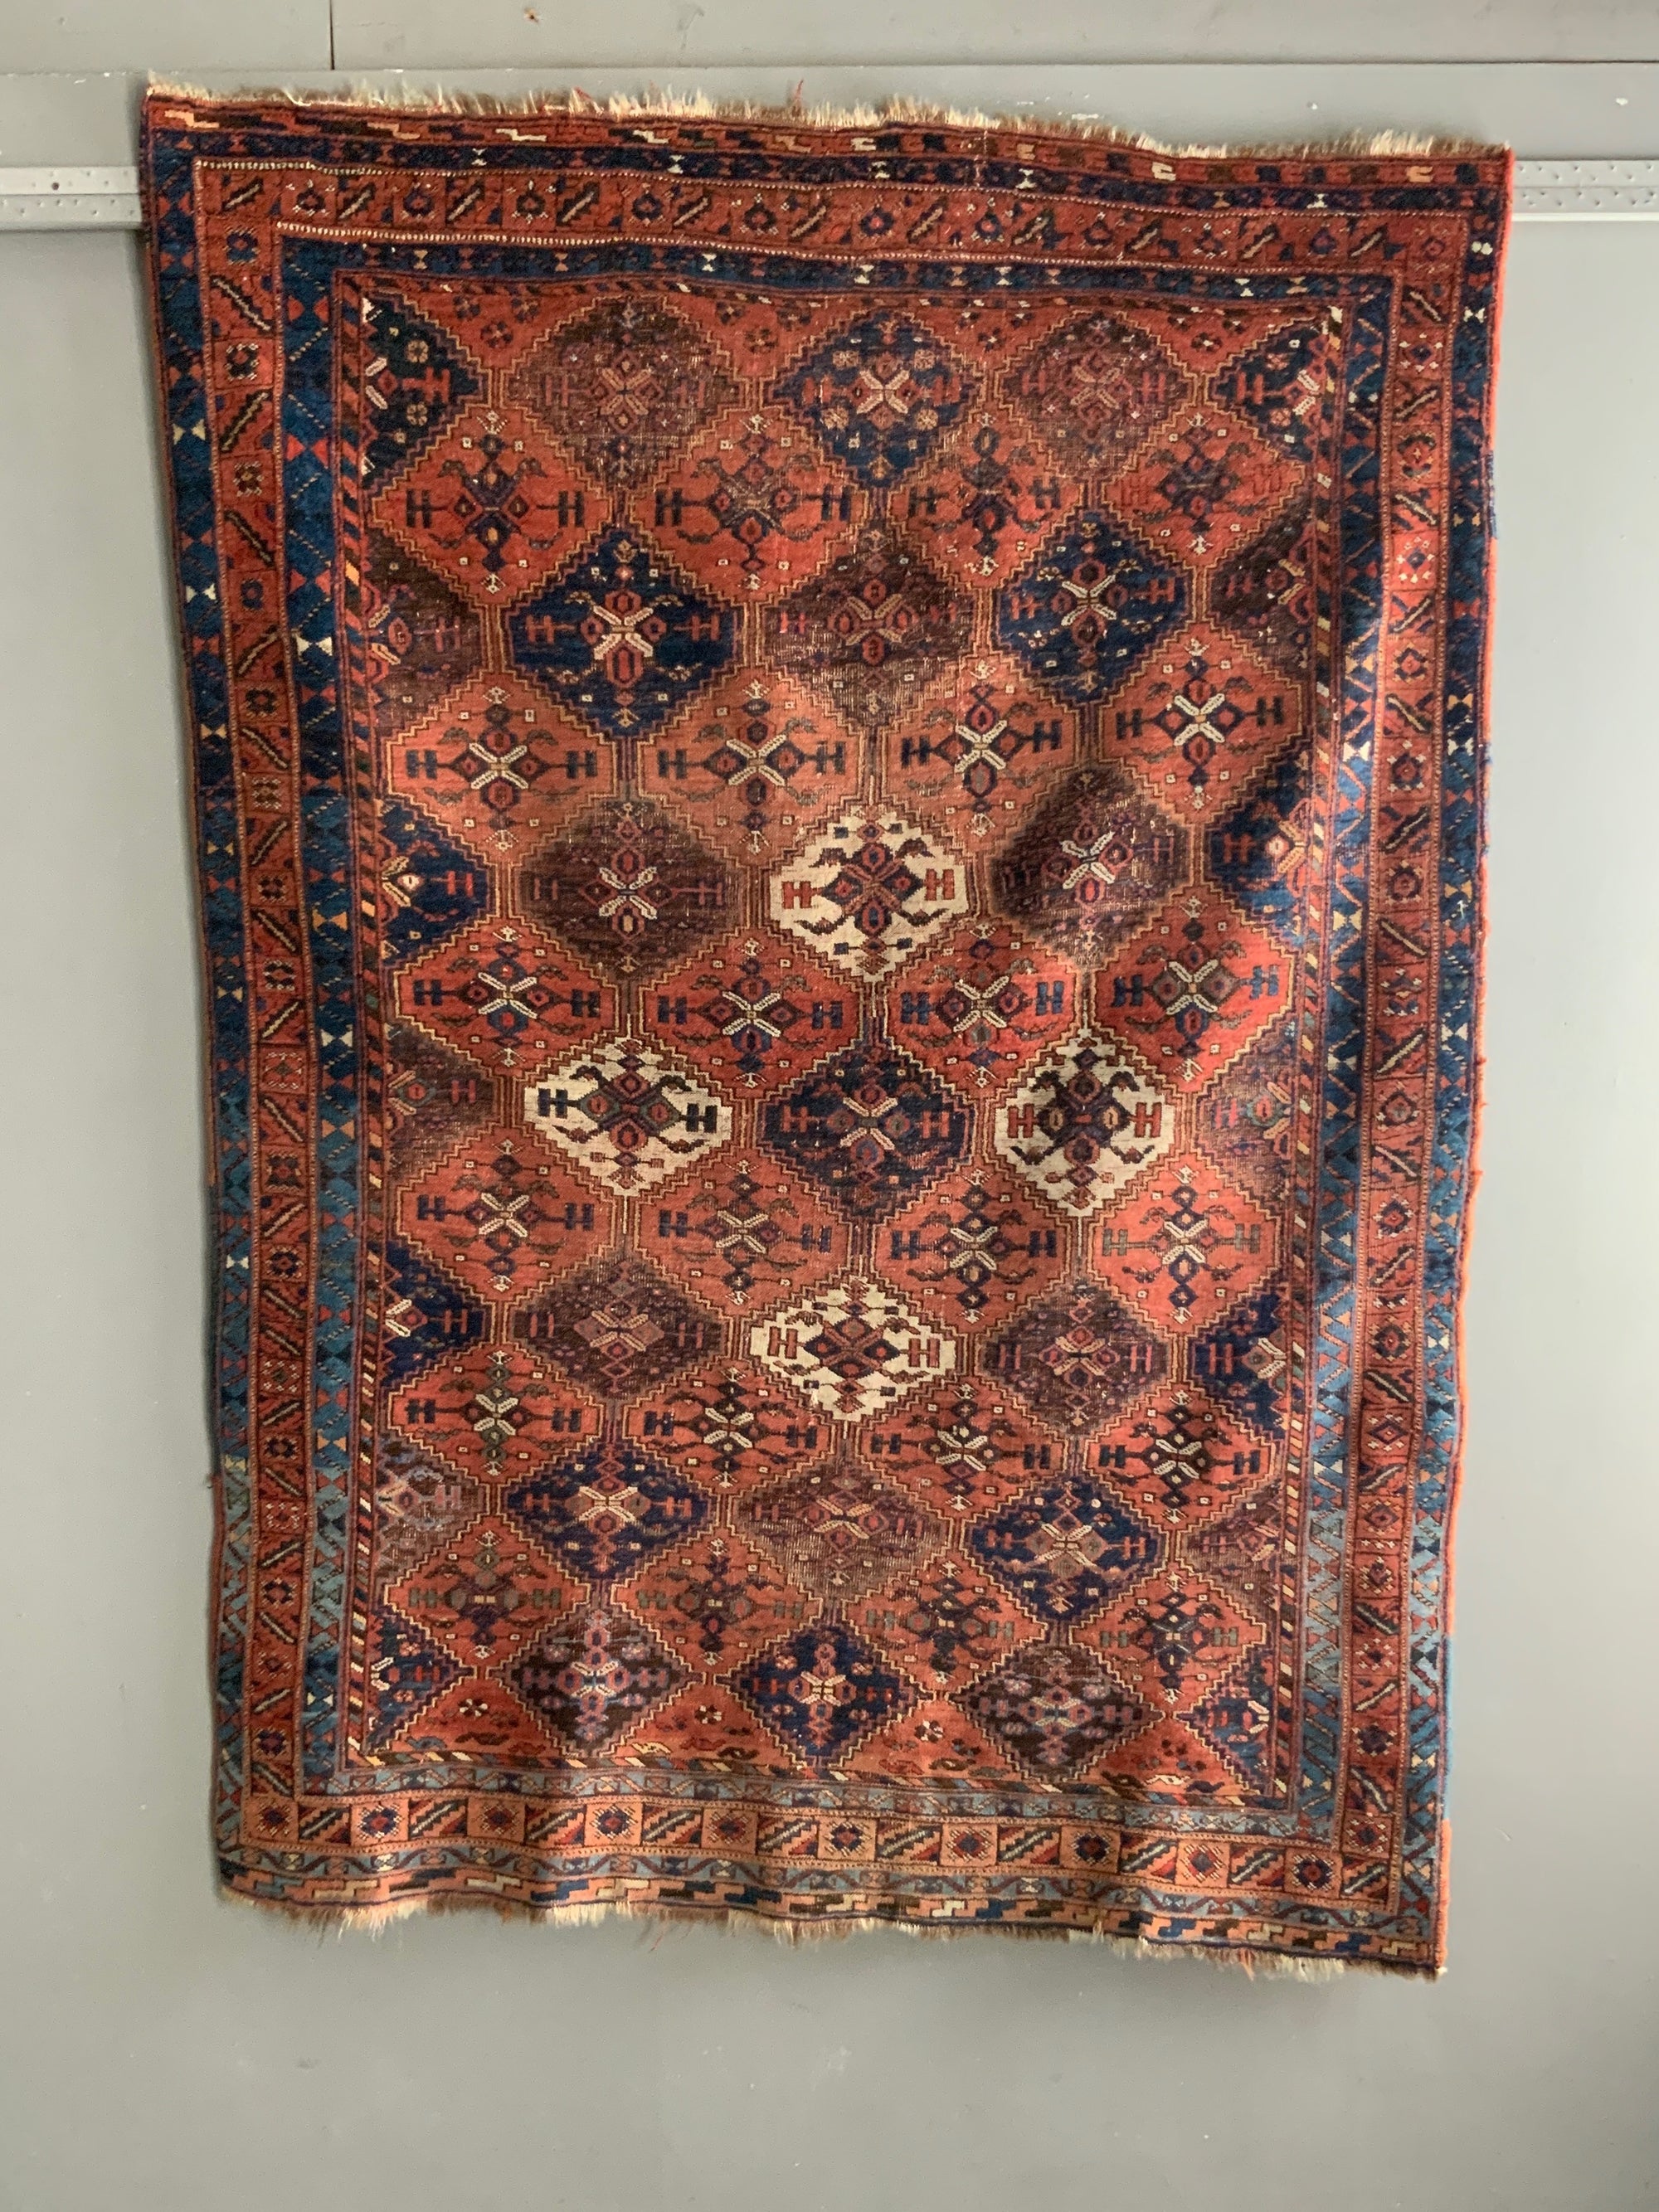 Afshar antique rug (197 x 144cm)